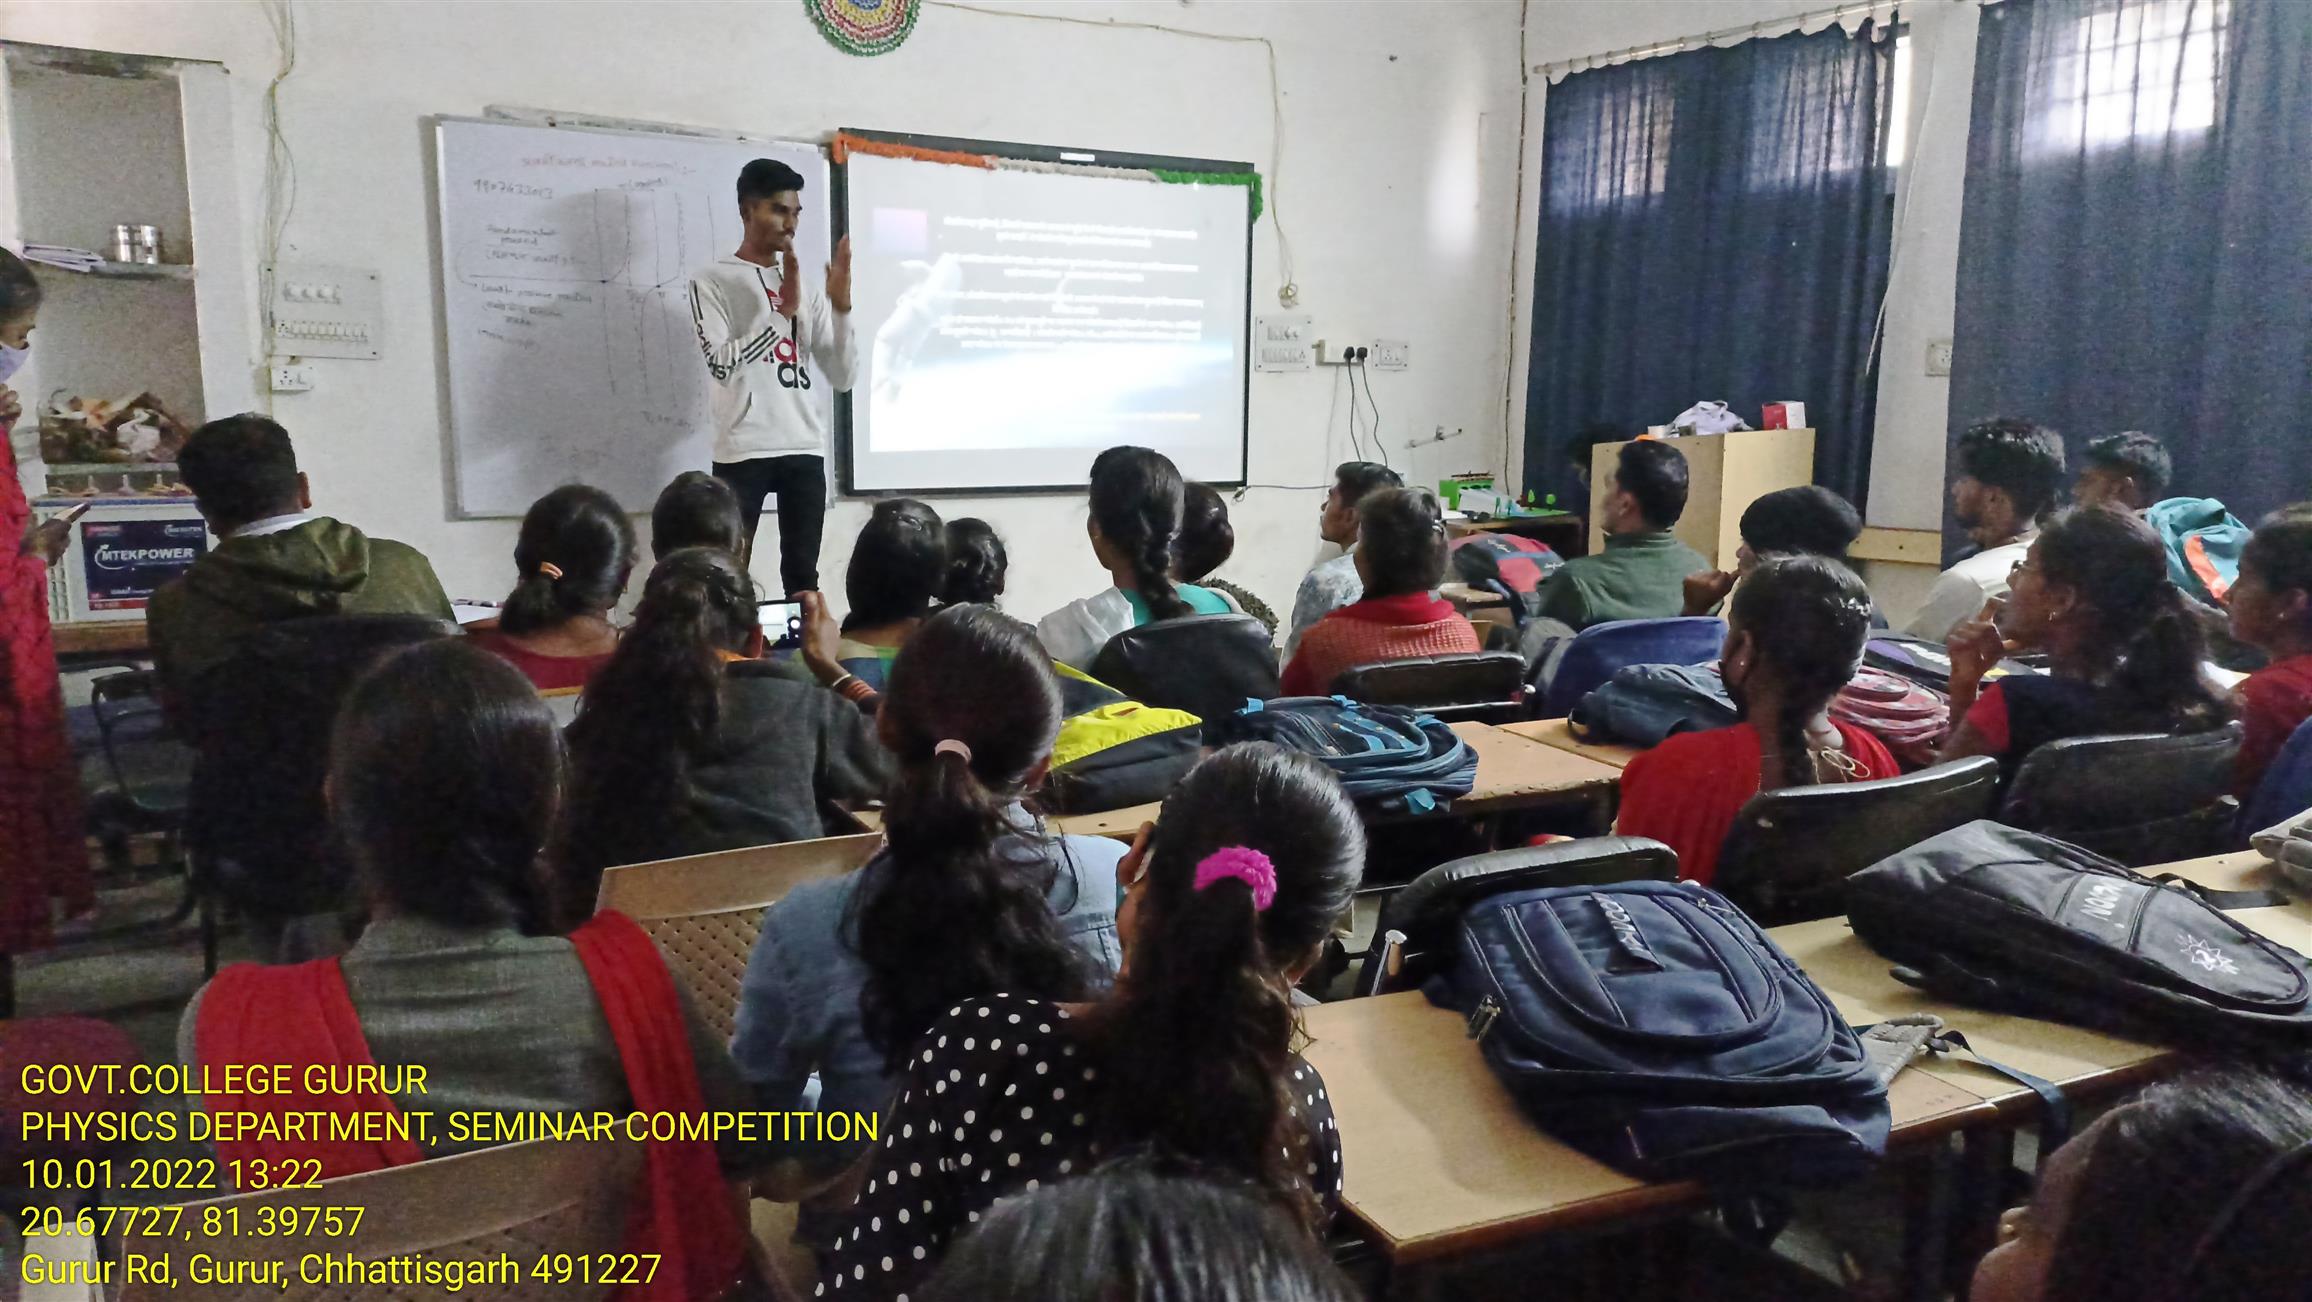 PPT Presentation Competition (Physics Department) - Photo Govt. college Gurur